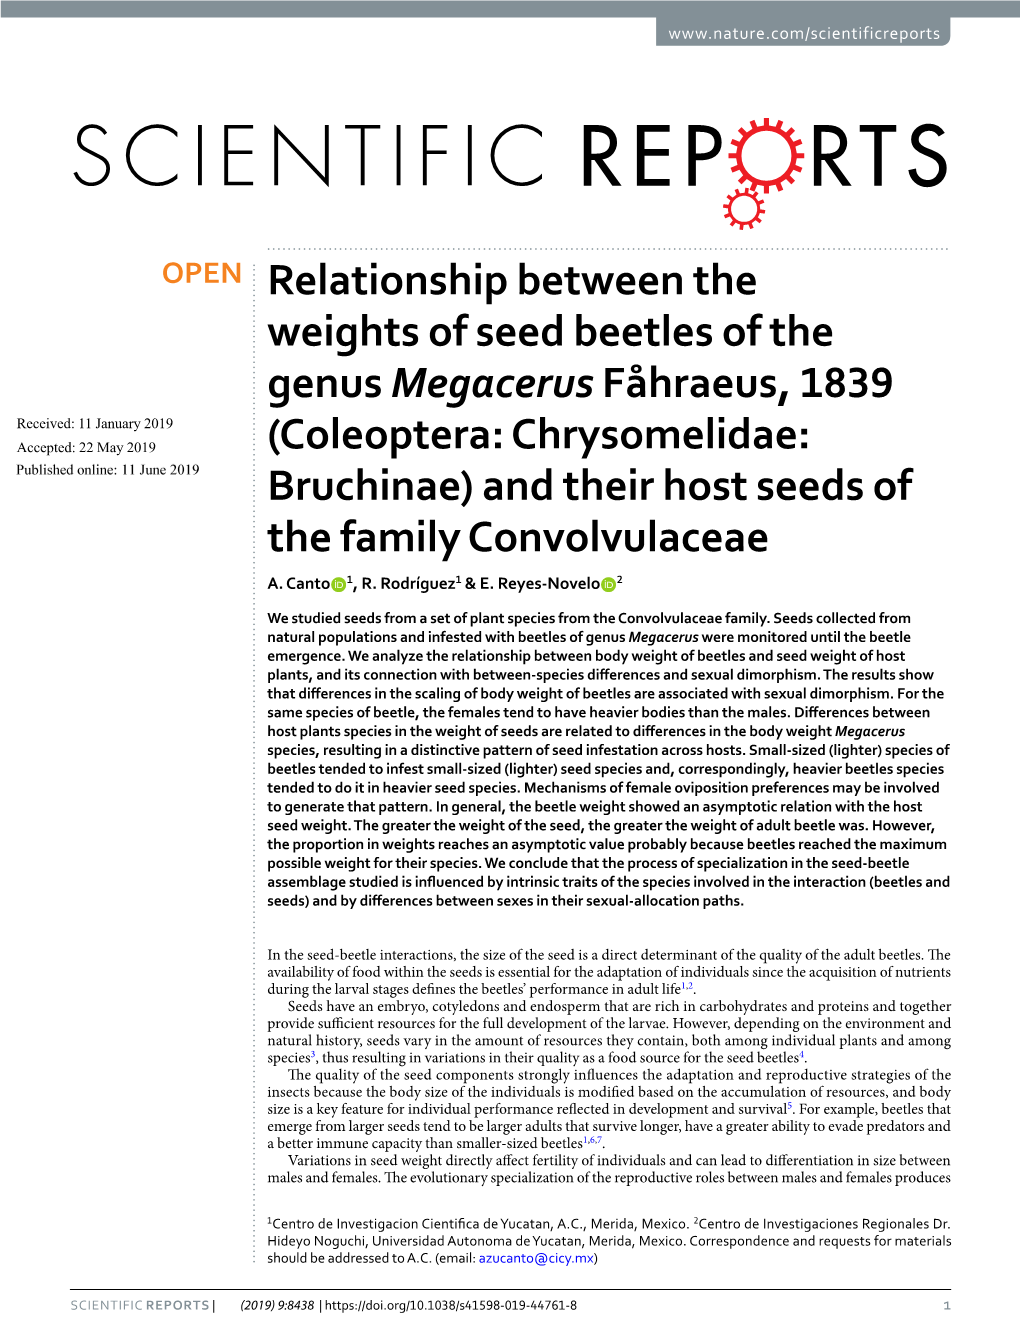 Relationship Between the Weights of Seed Beetles of the Genus